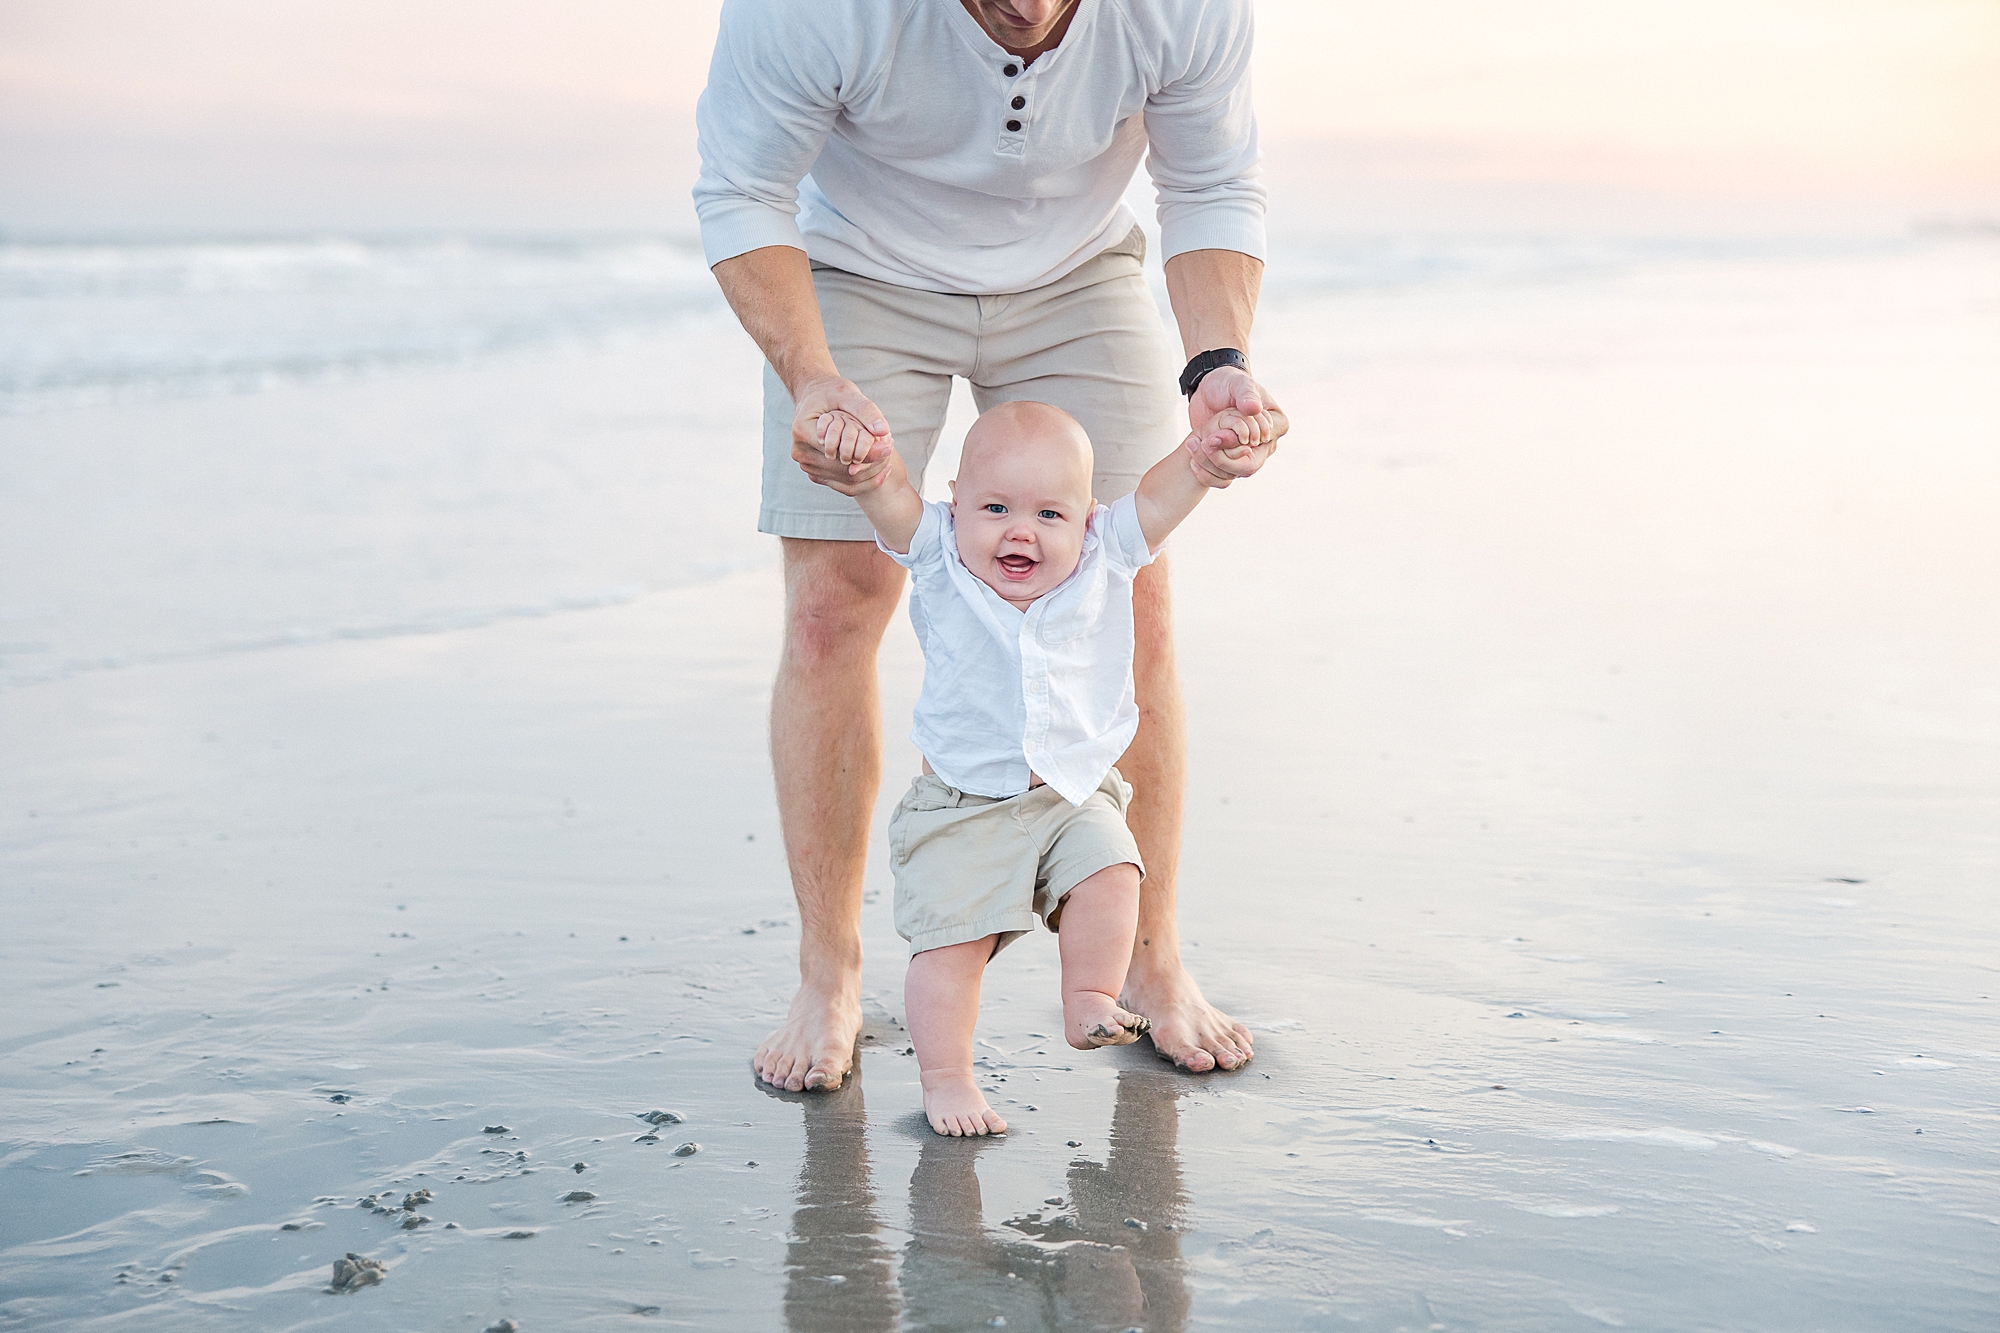 dad helps infant son walk along the beach